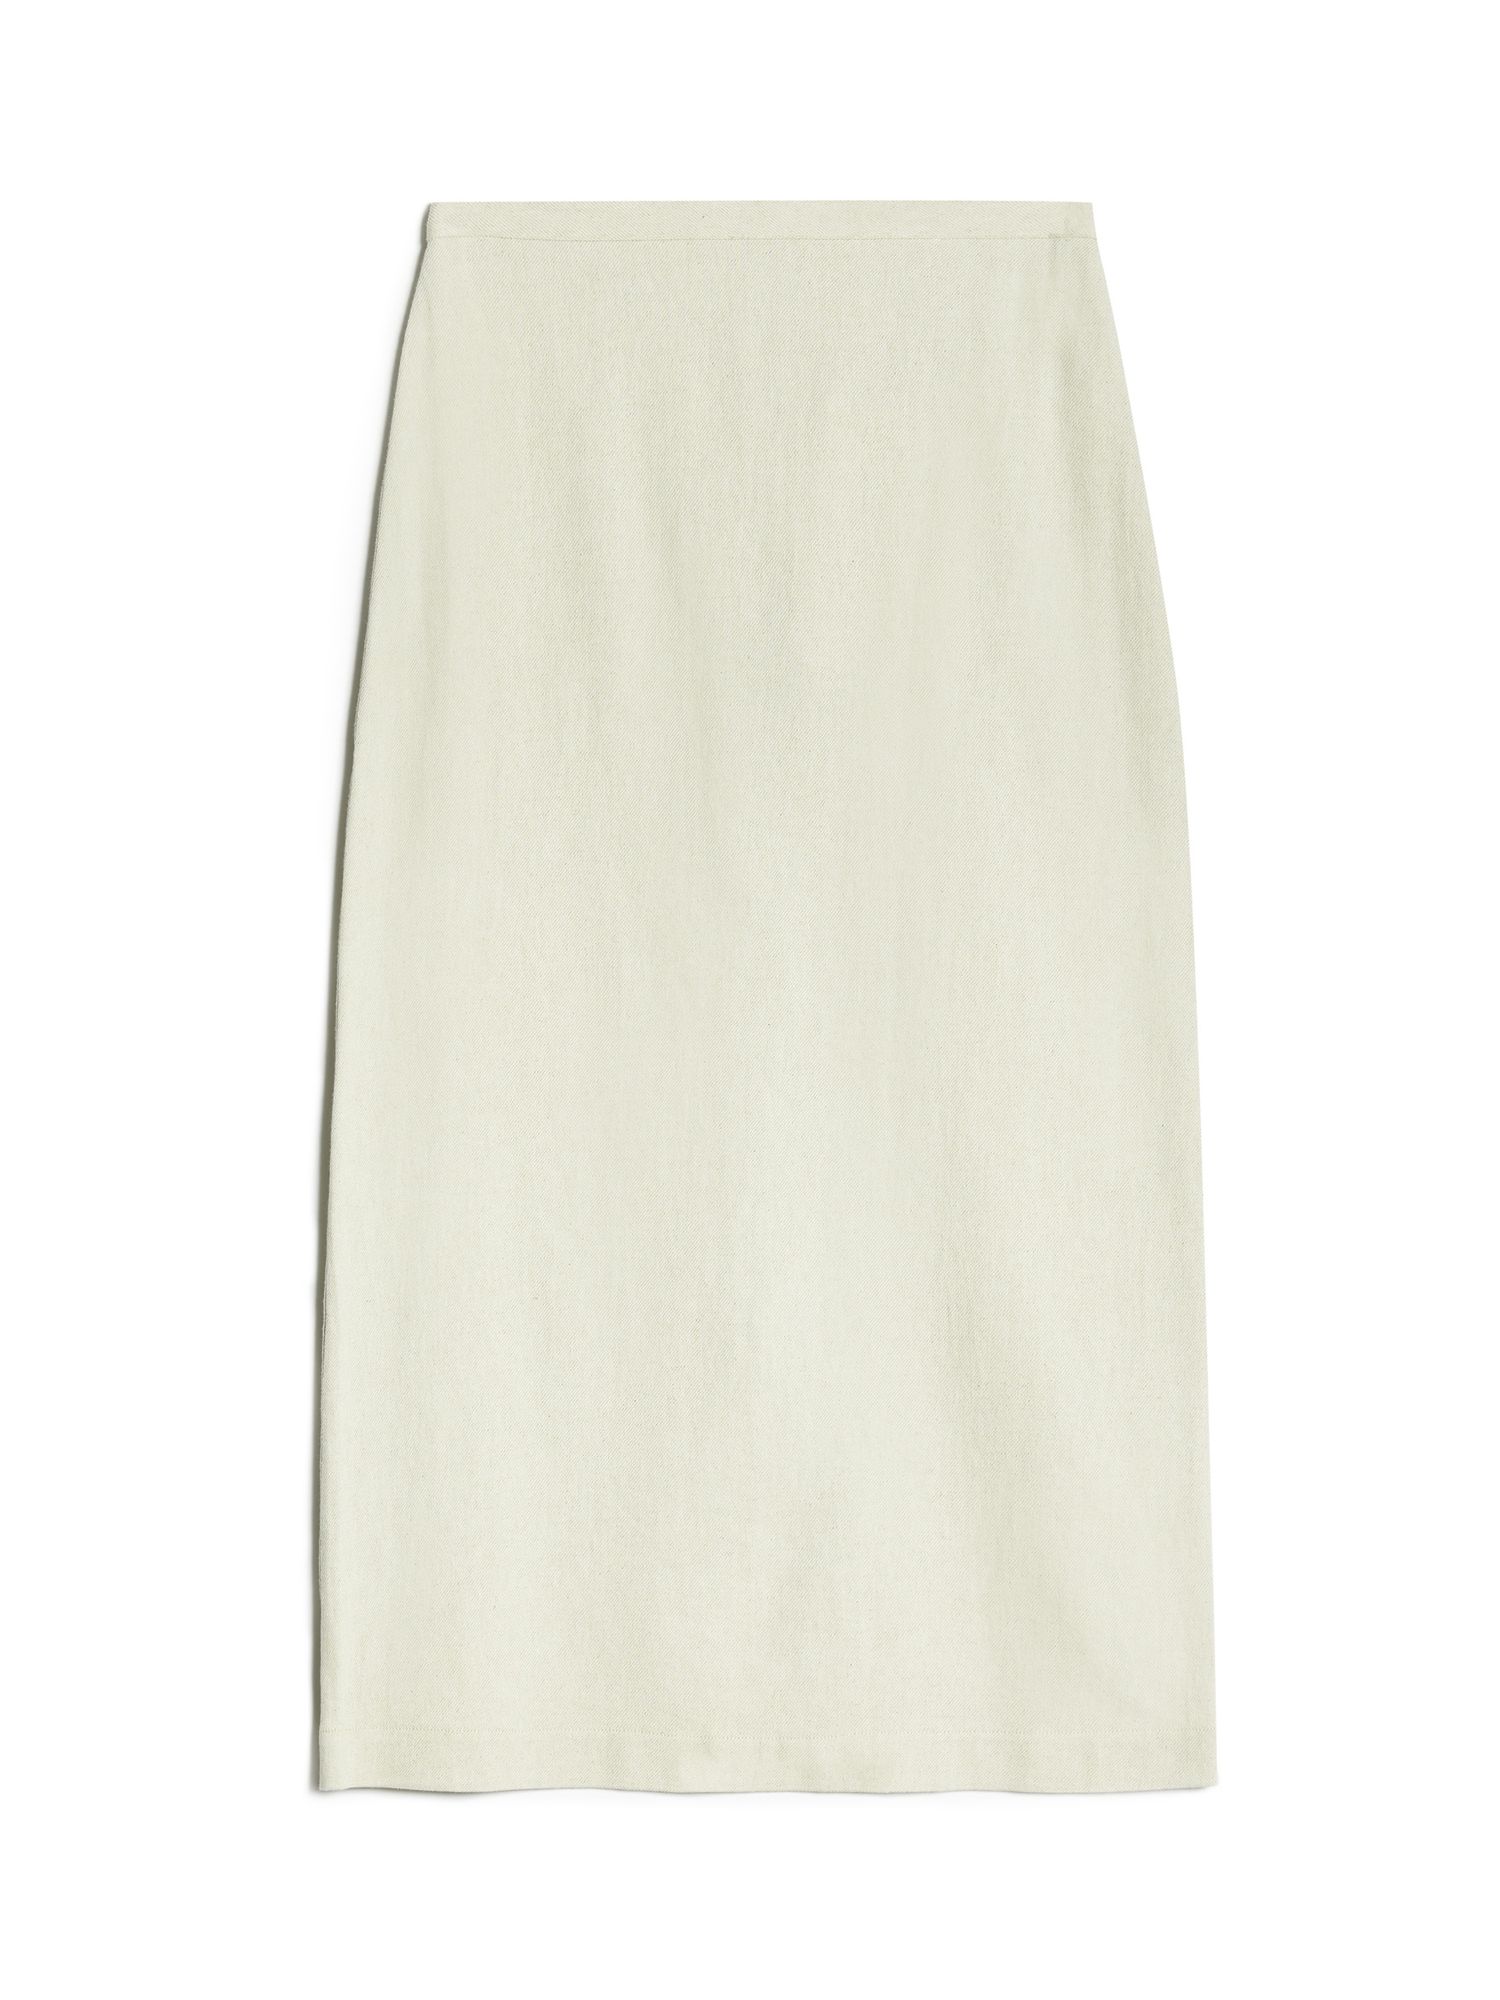 Albaray Linen Twill Blend Midi Pencil Skirt, Sand, 12